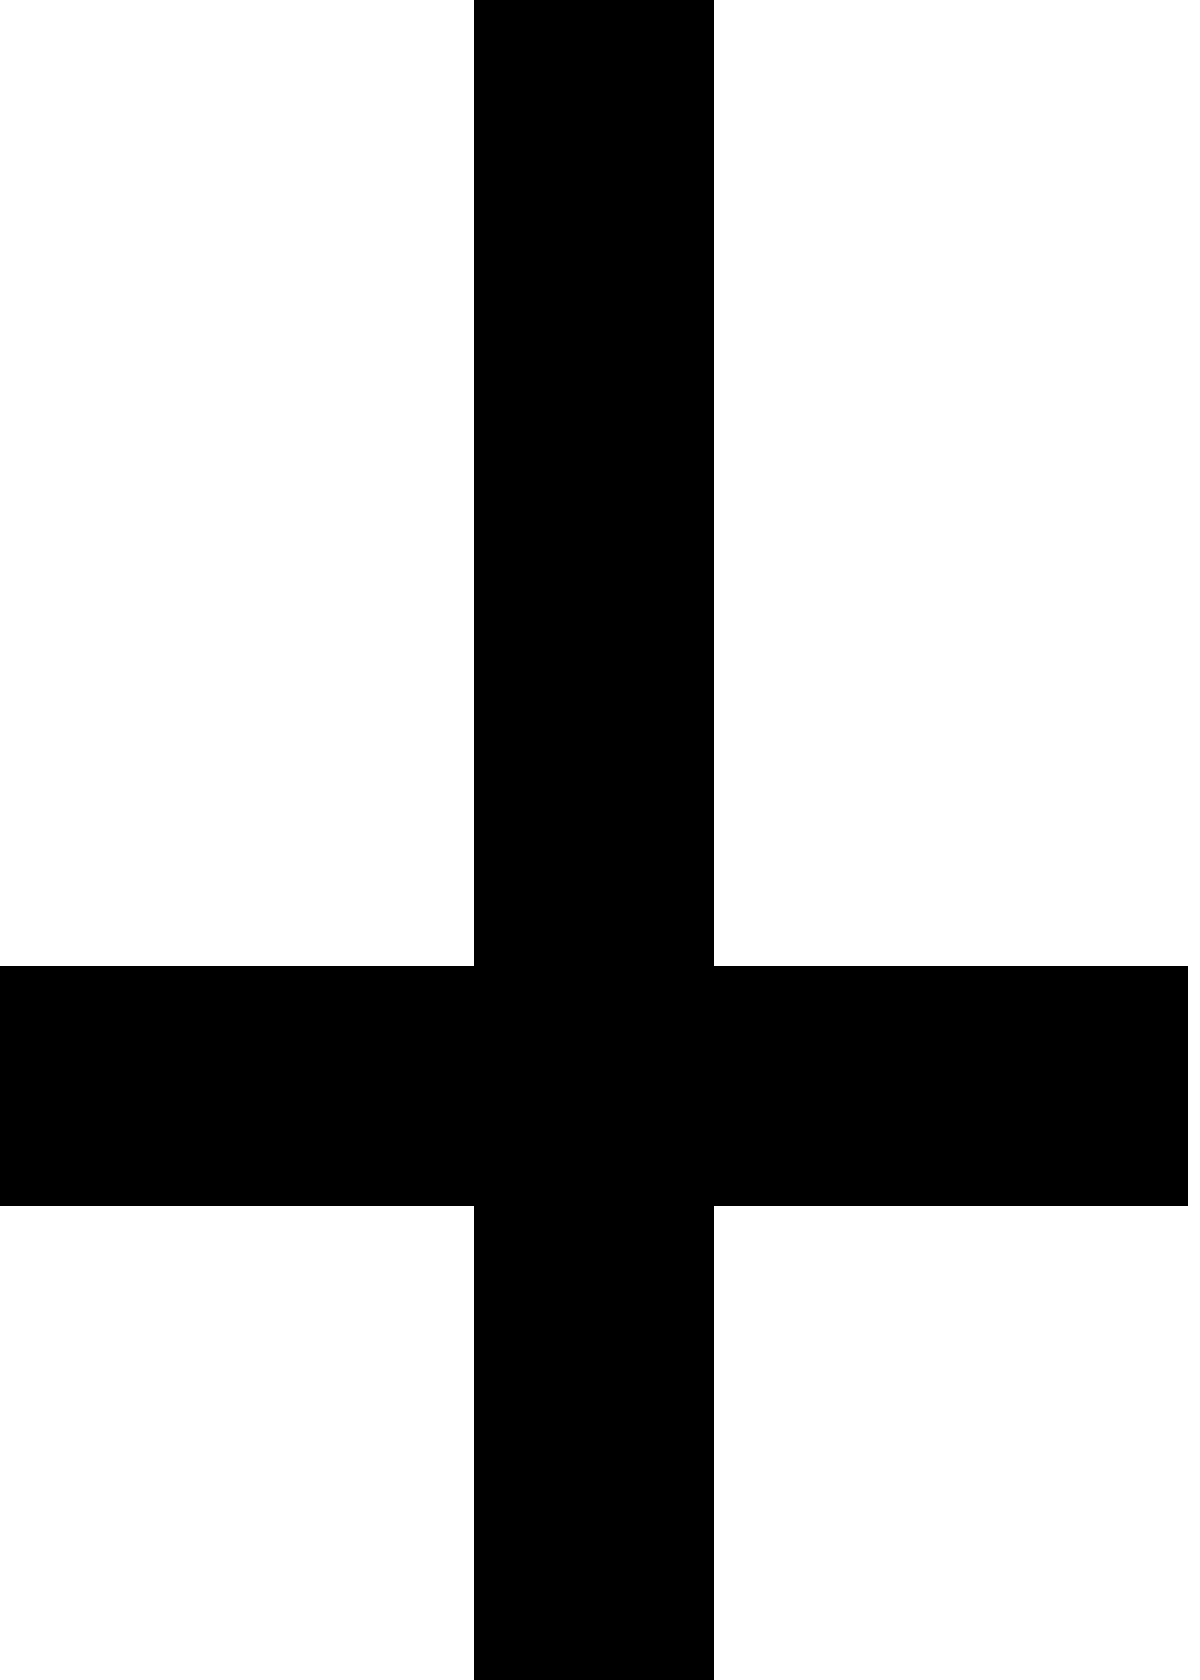 Black and White Cross Logo - Cross of Saint Peter